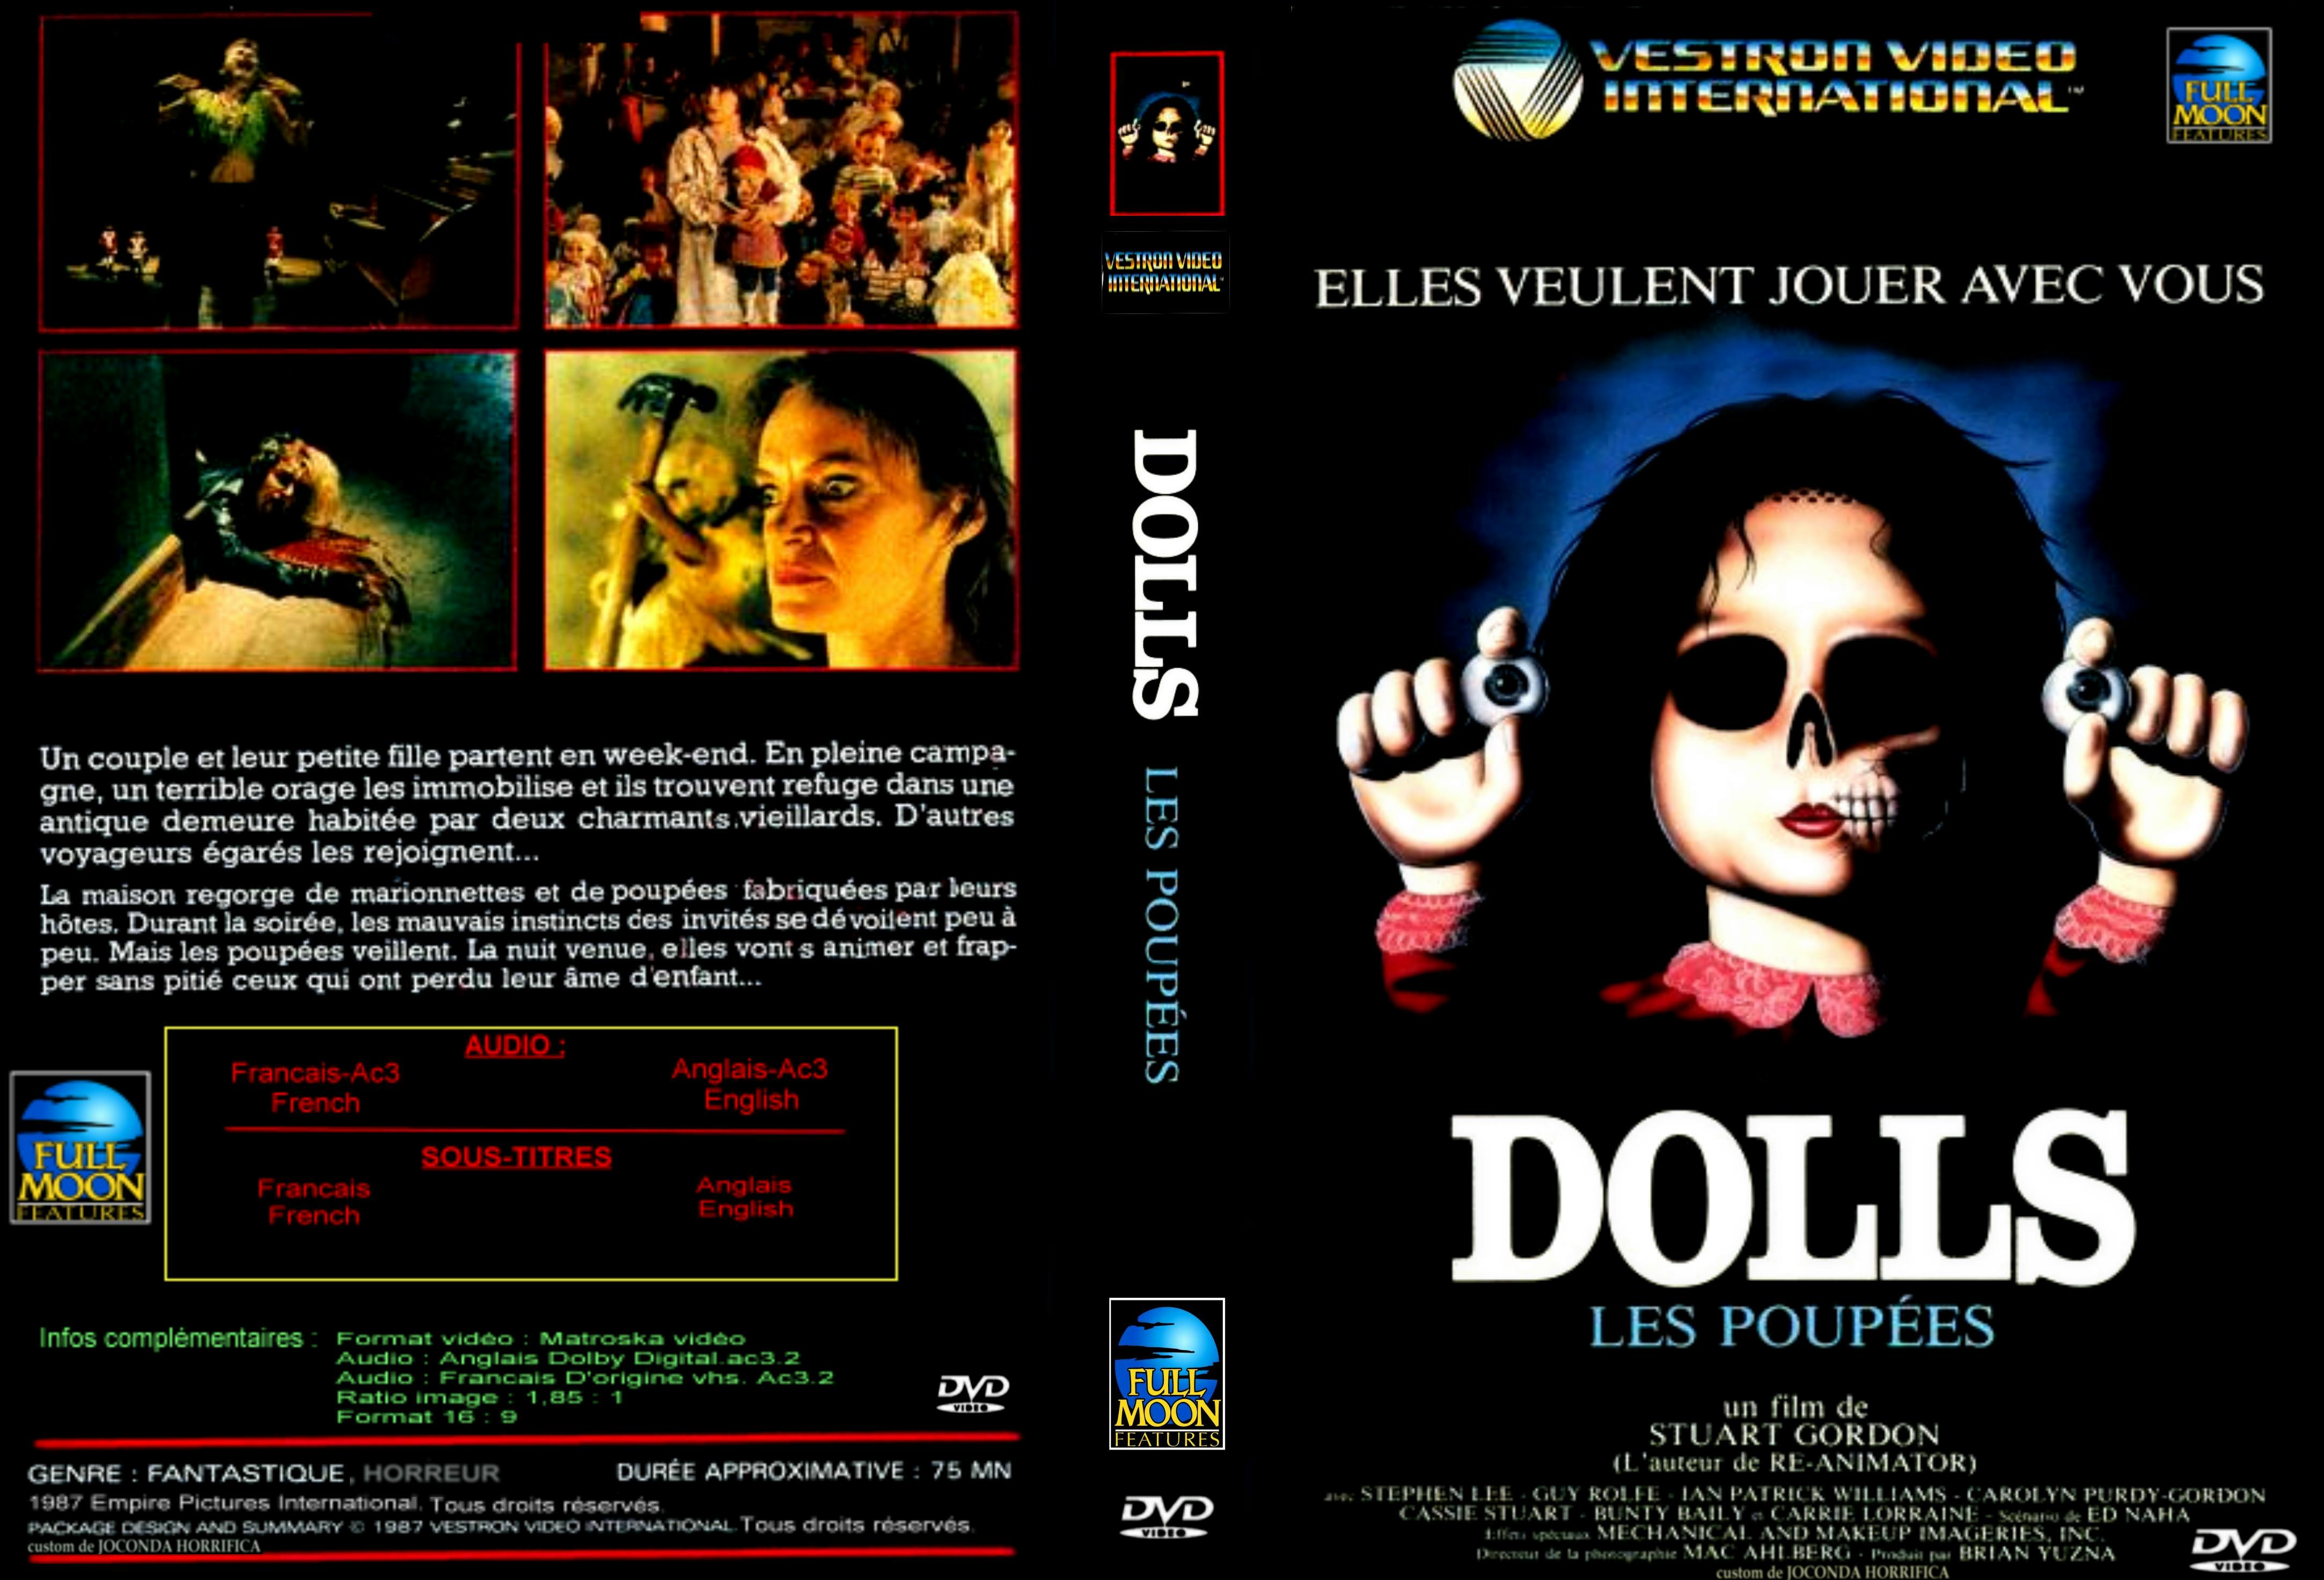 Jaquette DVD Dolls - les Poupes (1986) custom v2